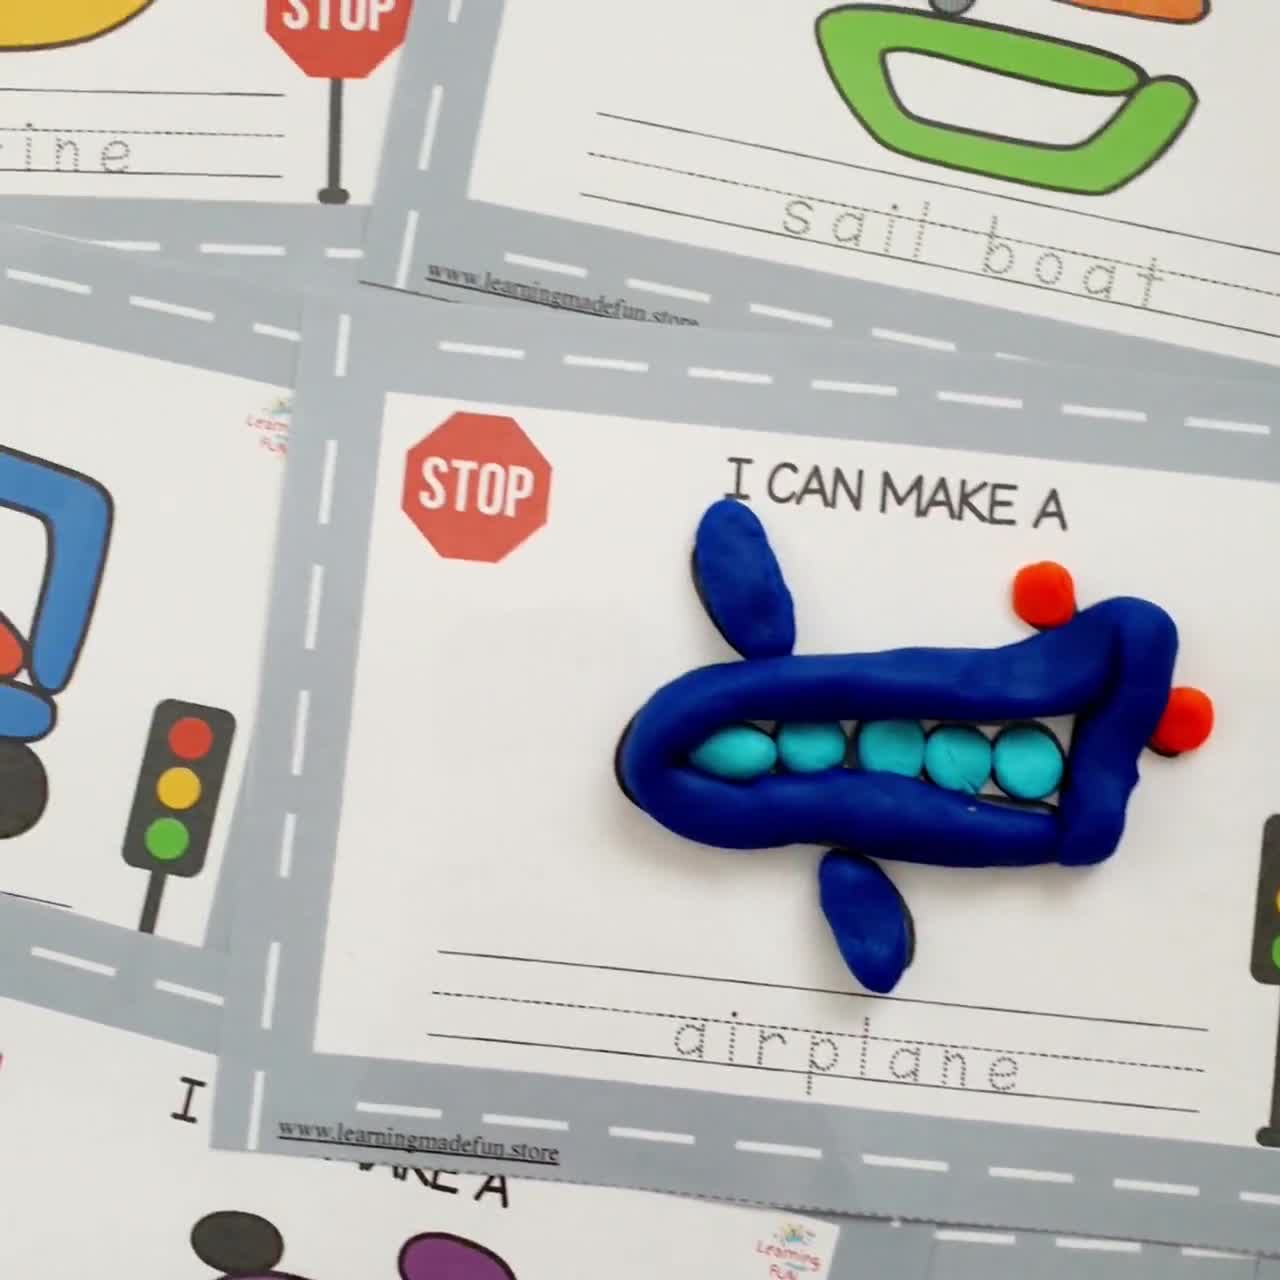 Play Doh Mats Transport Visual Cards, Printable Play Dough Toddler  Activities, Homeschool Montessori Materials Pre-k Kindergarten Preschool 